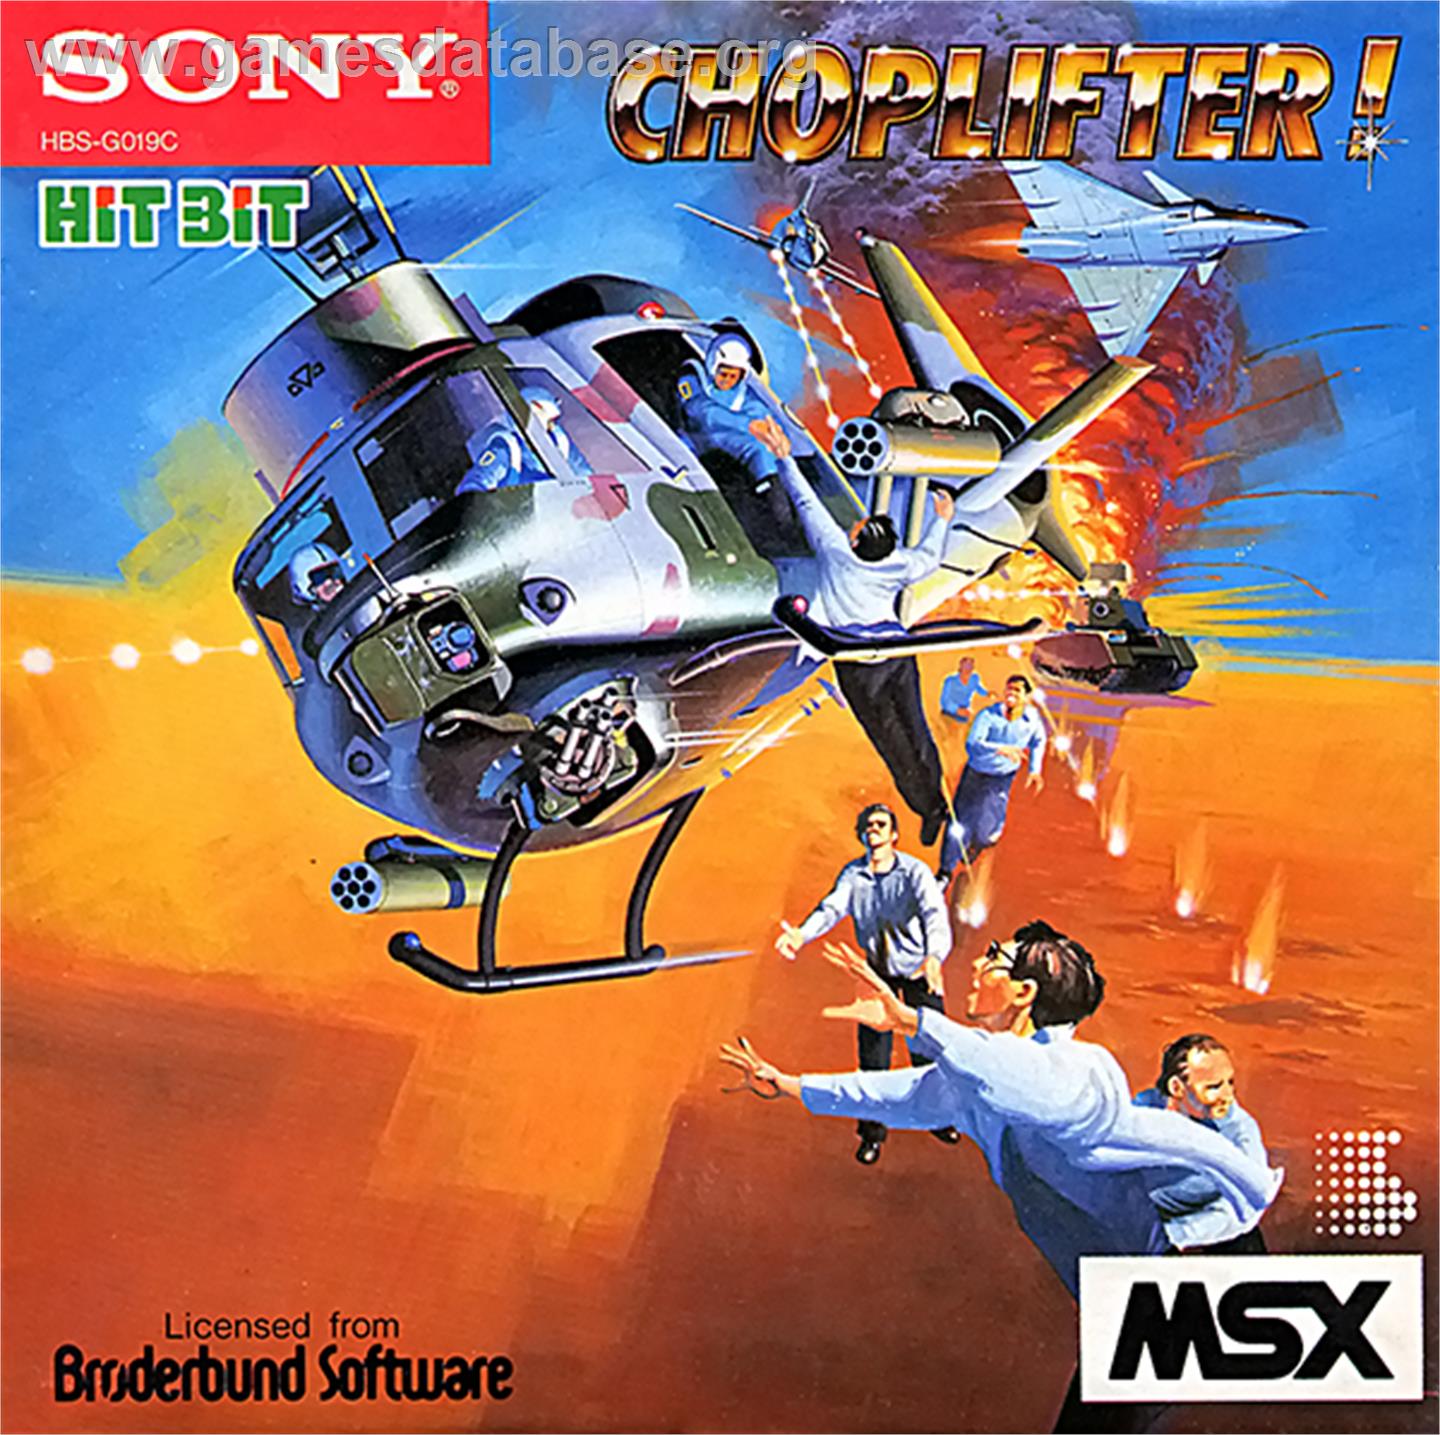 Choplifter - MSX - Artwork - Box